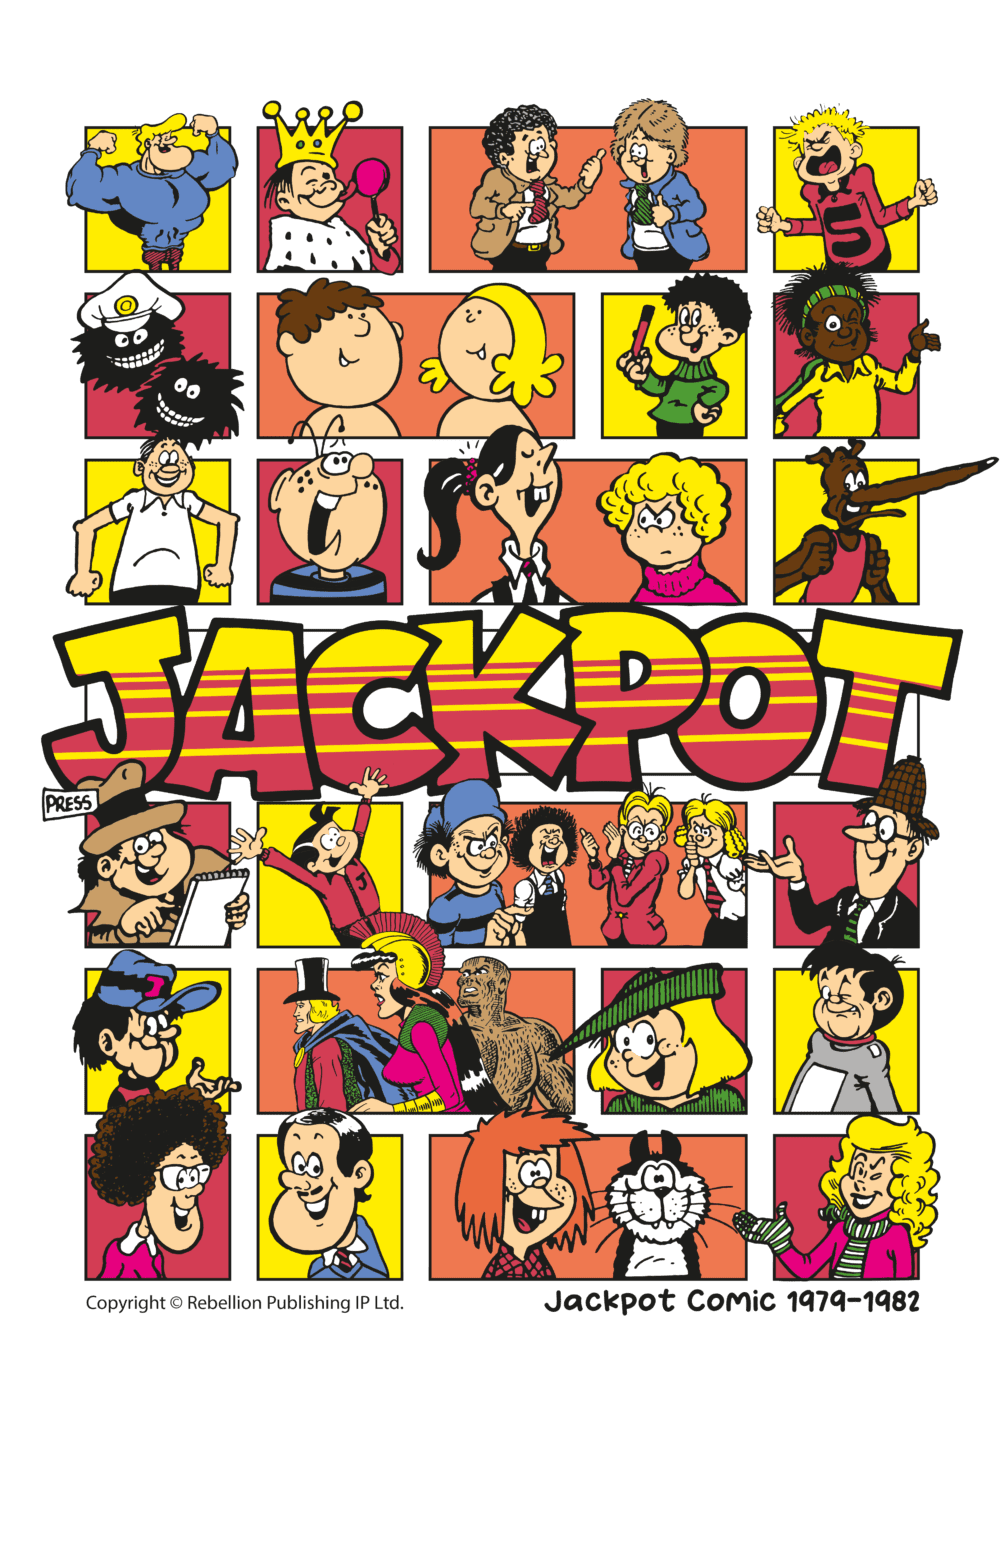 Jackpot Comic Characters